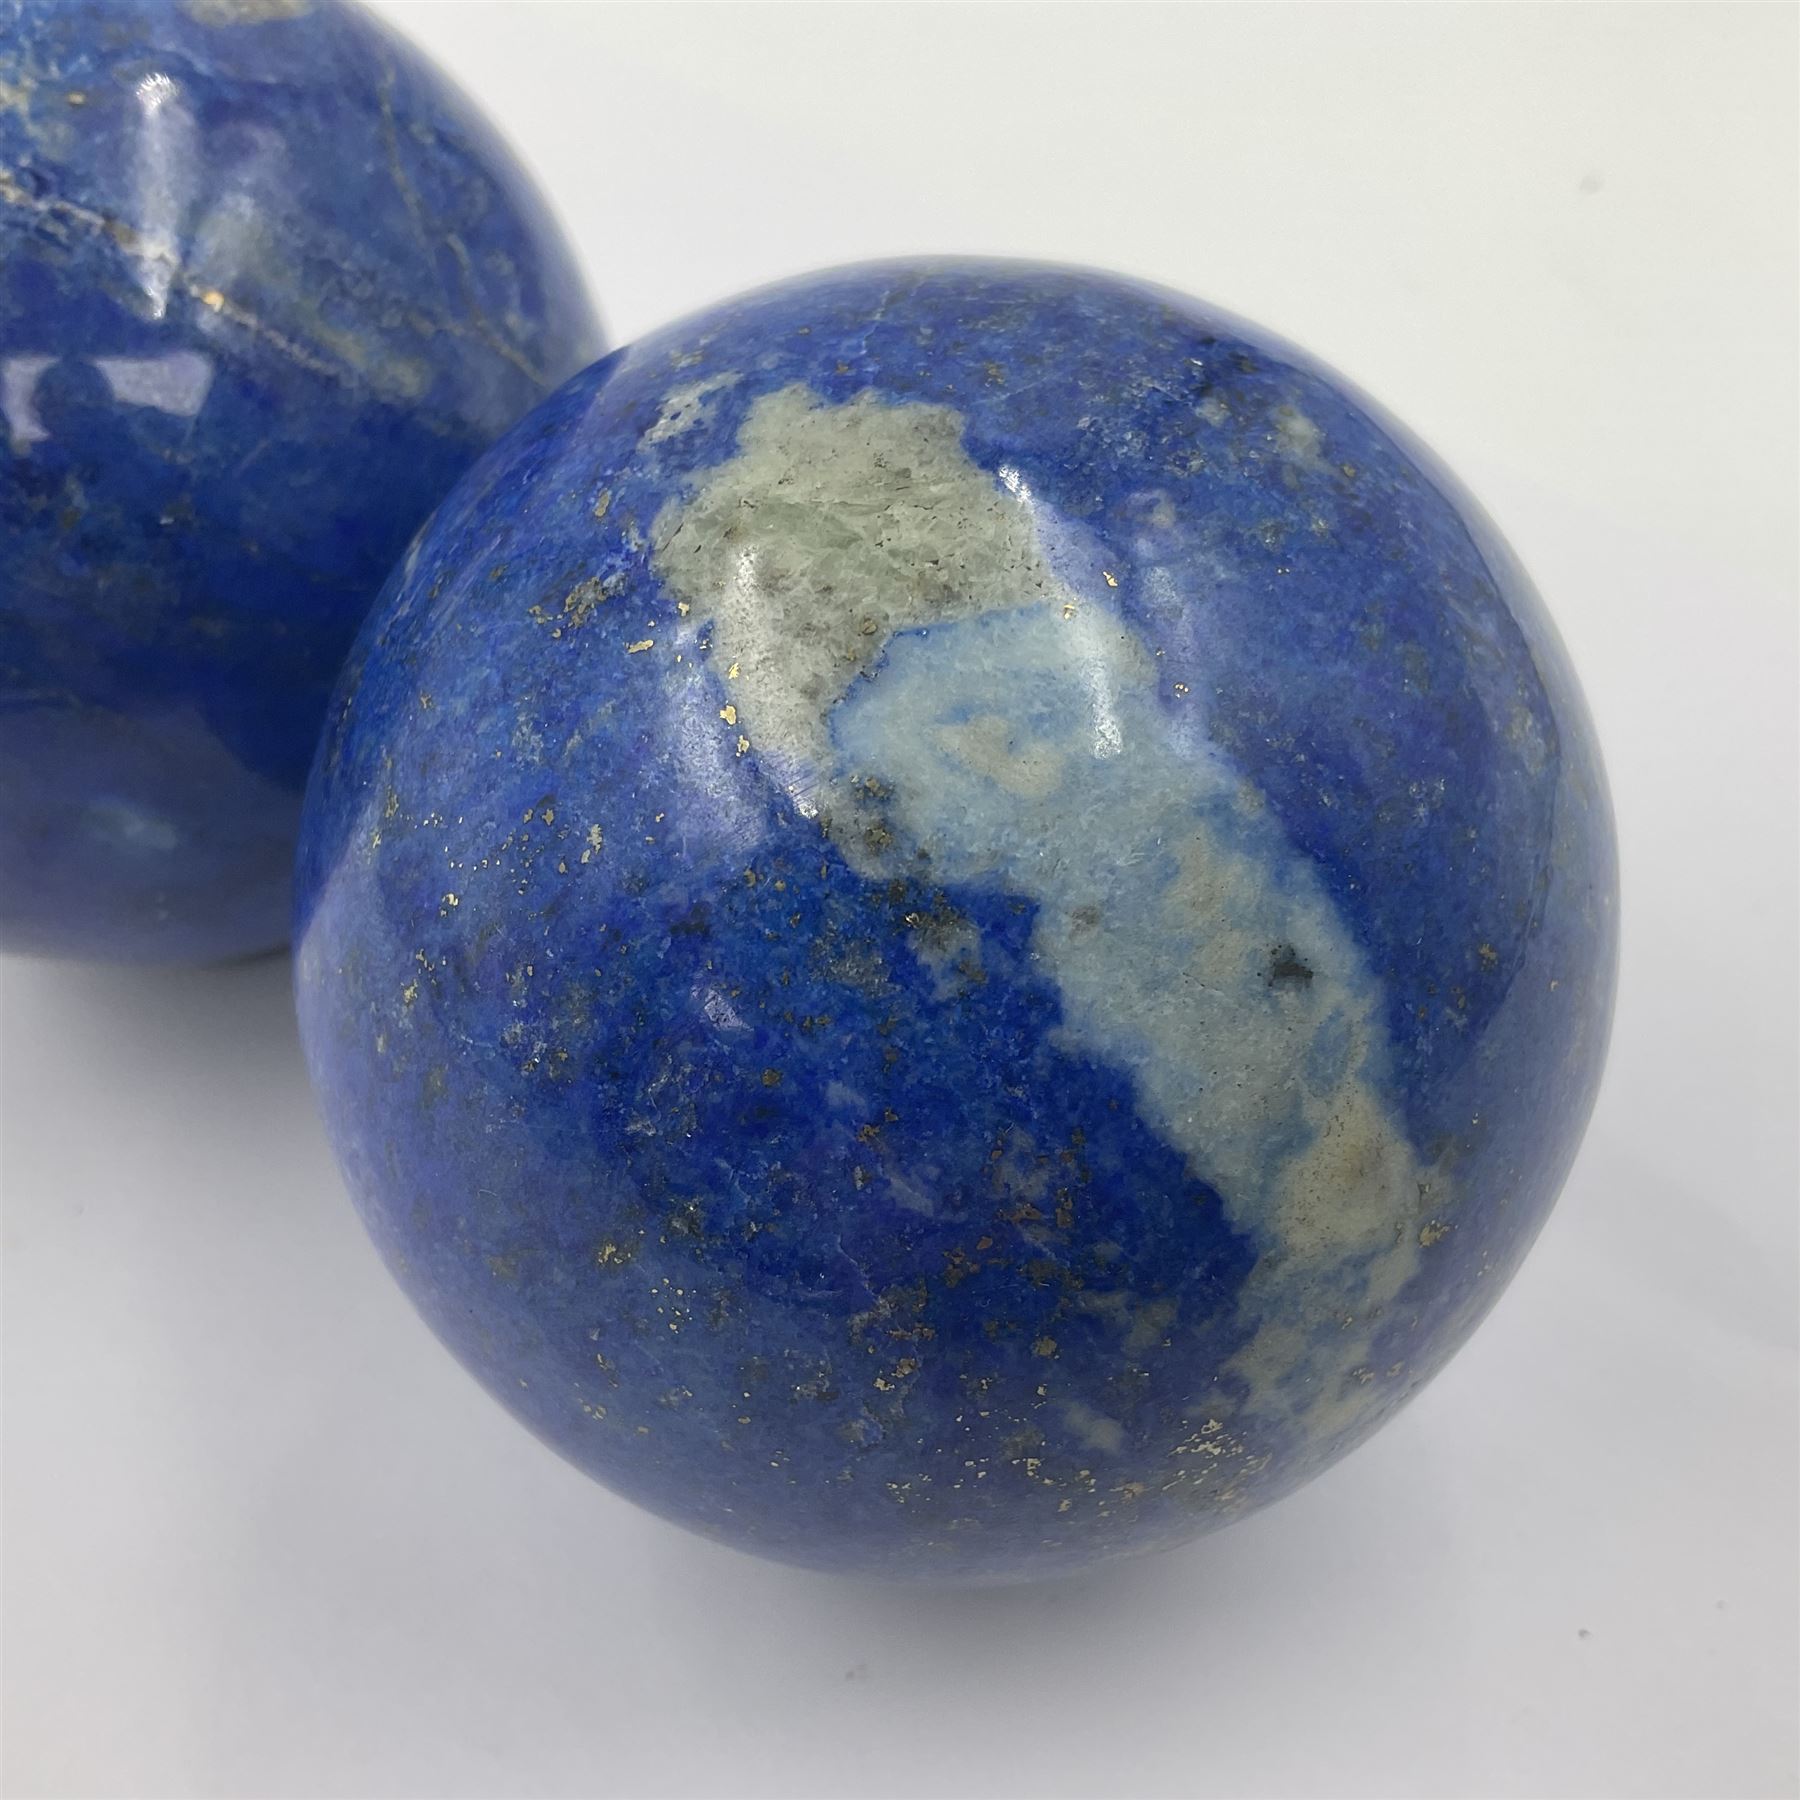 Pair of Lapis lazuli spheres - Image 8 of 8